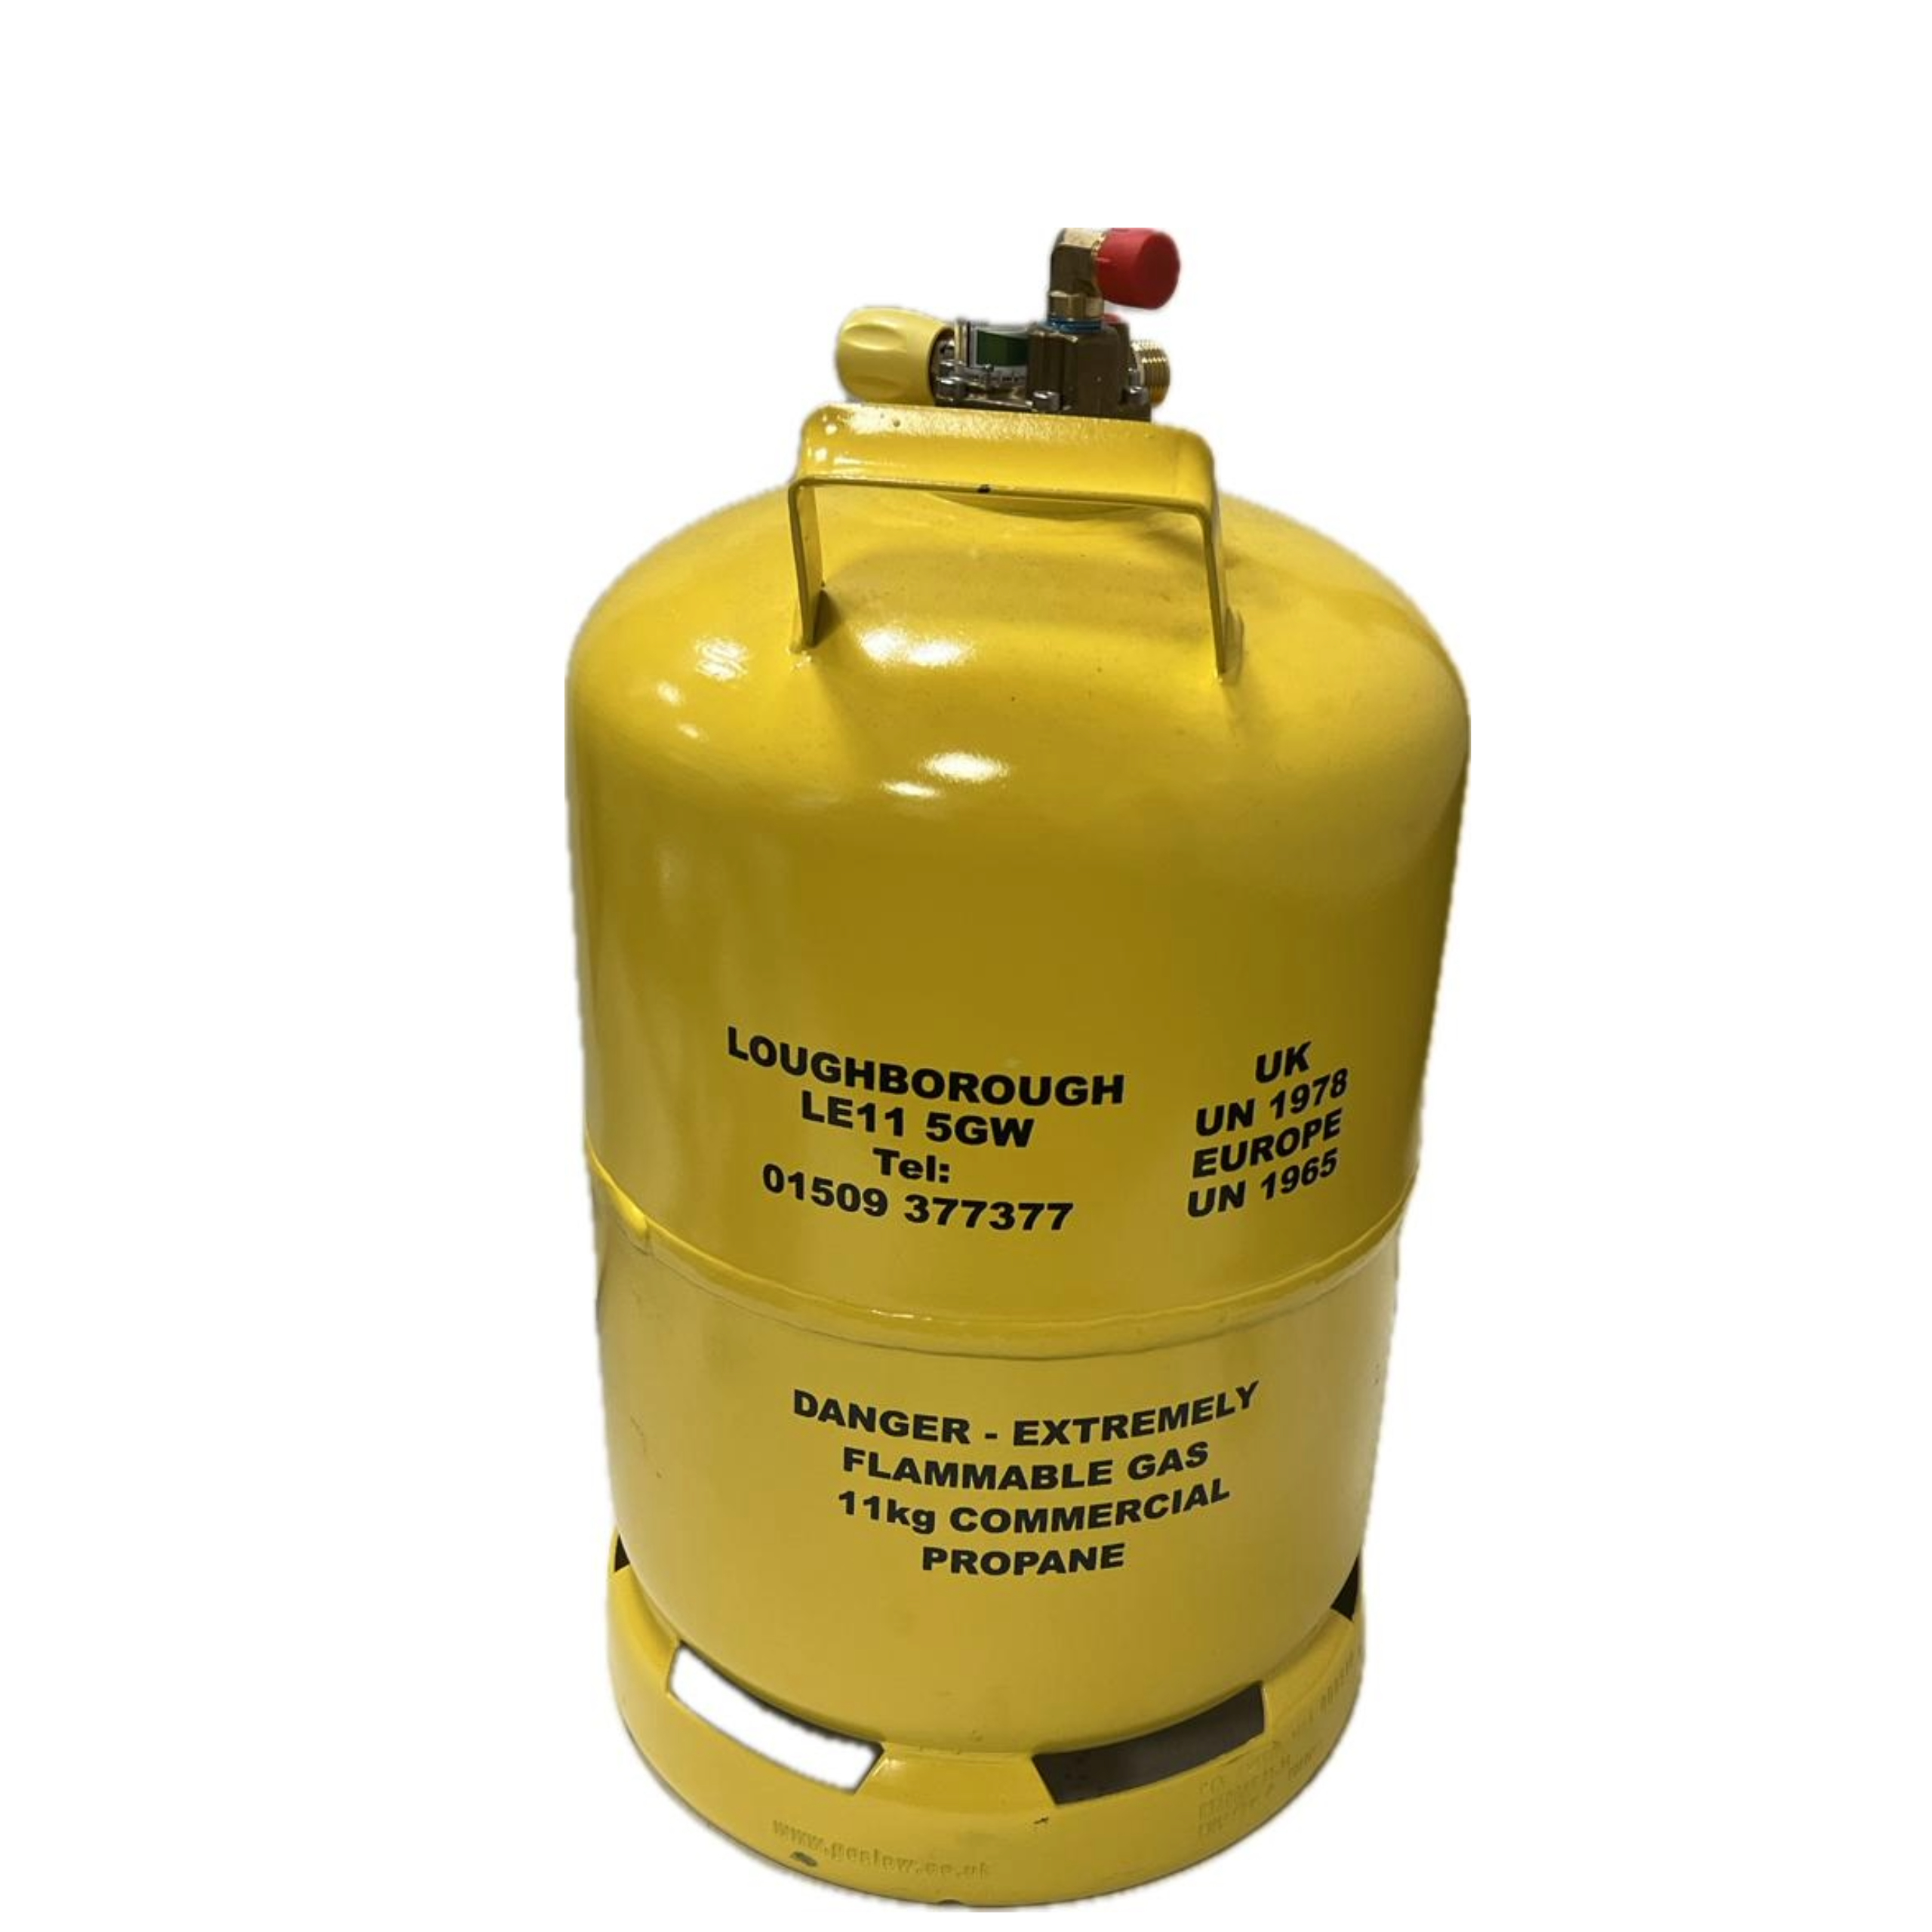 Gasflasche Gaslow 2,7 kg gelb wiederbefüllbar Tankflasche LPG (310x202mm) + Adapter  Set - Frontgas Onlineshop